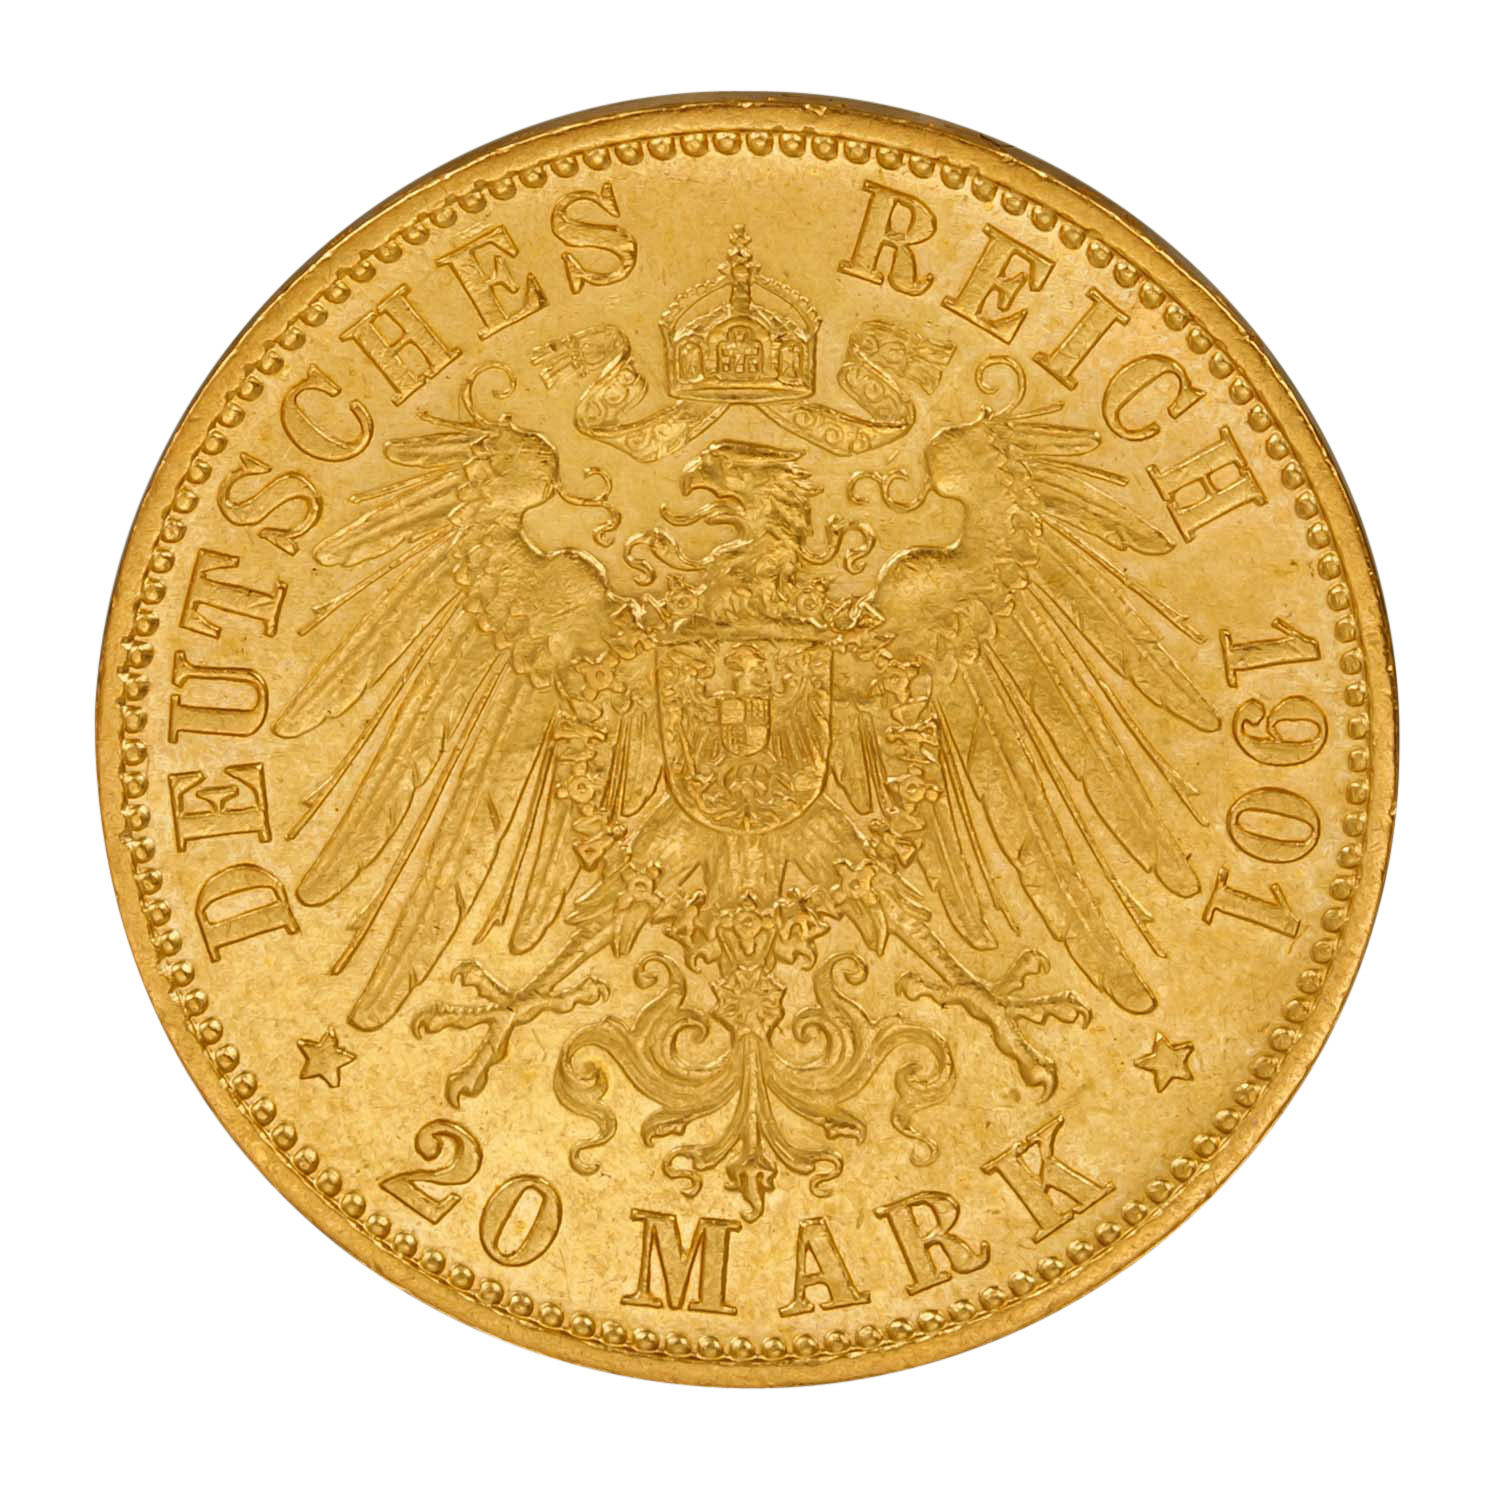 Großherzogtum Mecklenburg-Schwerin/Gold - 20 Mark 1901/A, - Image 2 of 3